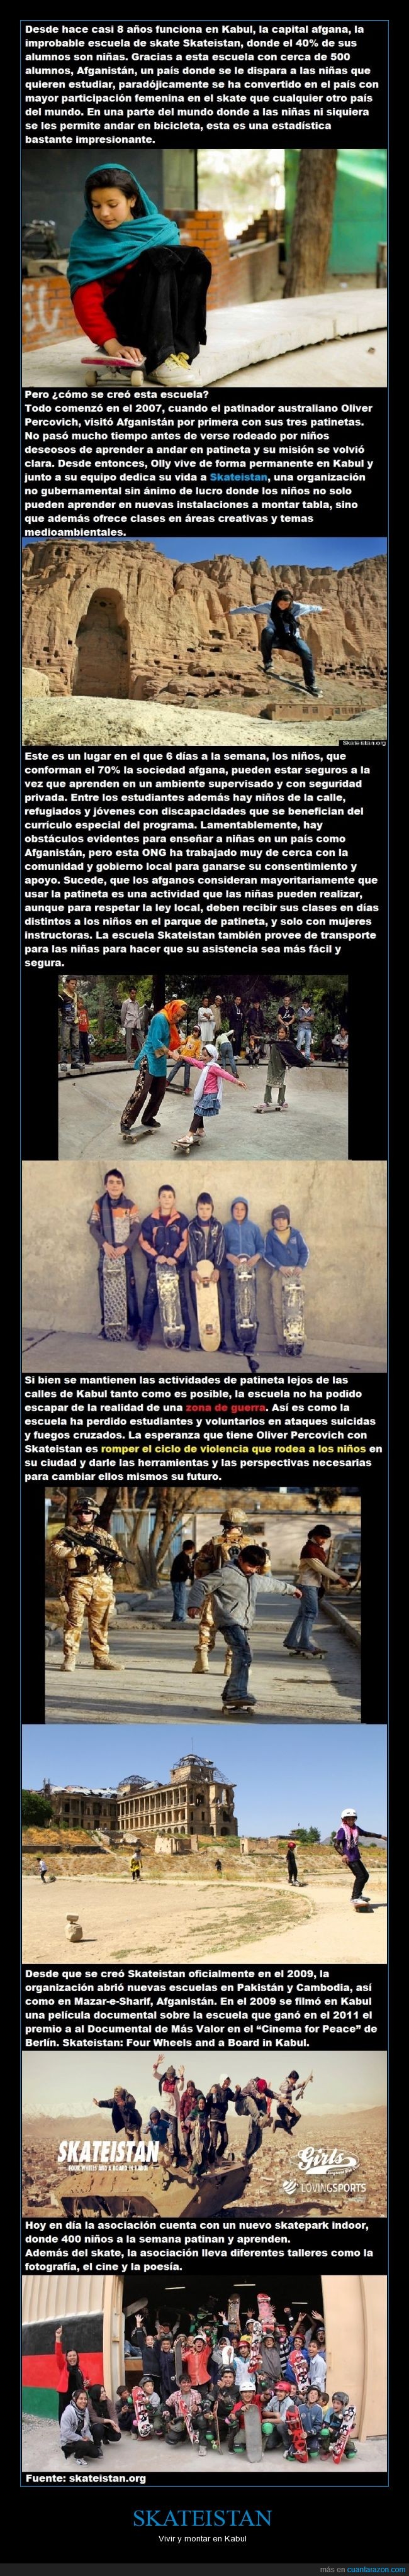 patinaje,skate,skateistan,proyecto,patin,skateboard,skaters,niña,Afganistan